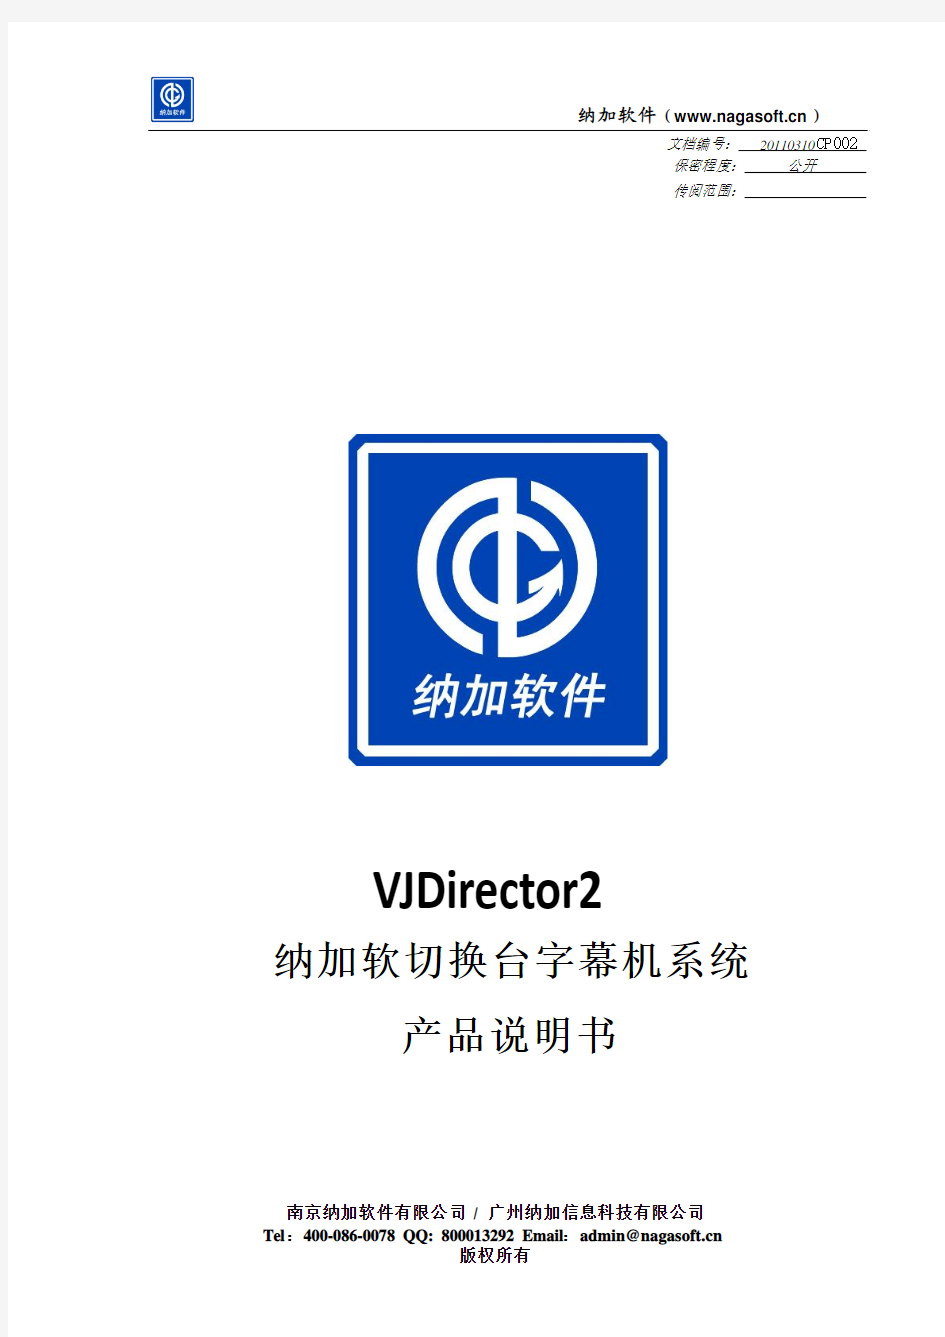 (VJDirector2)纳加软切换台字幕机软件-产品说明书